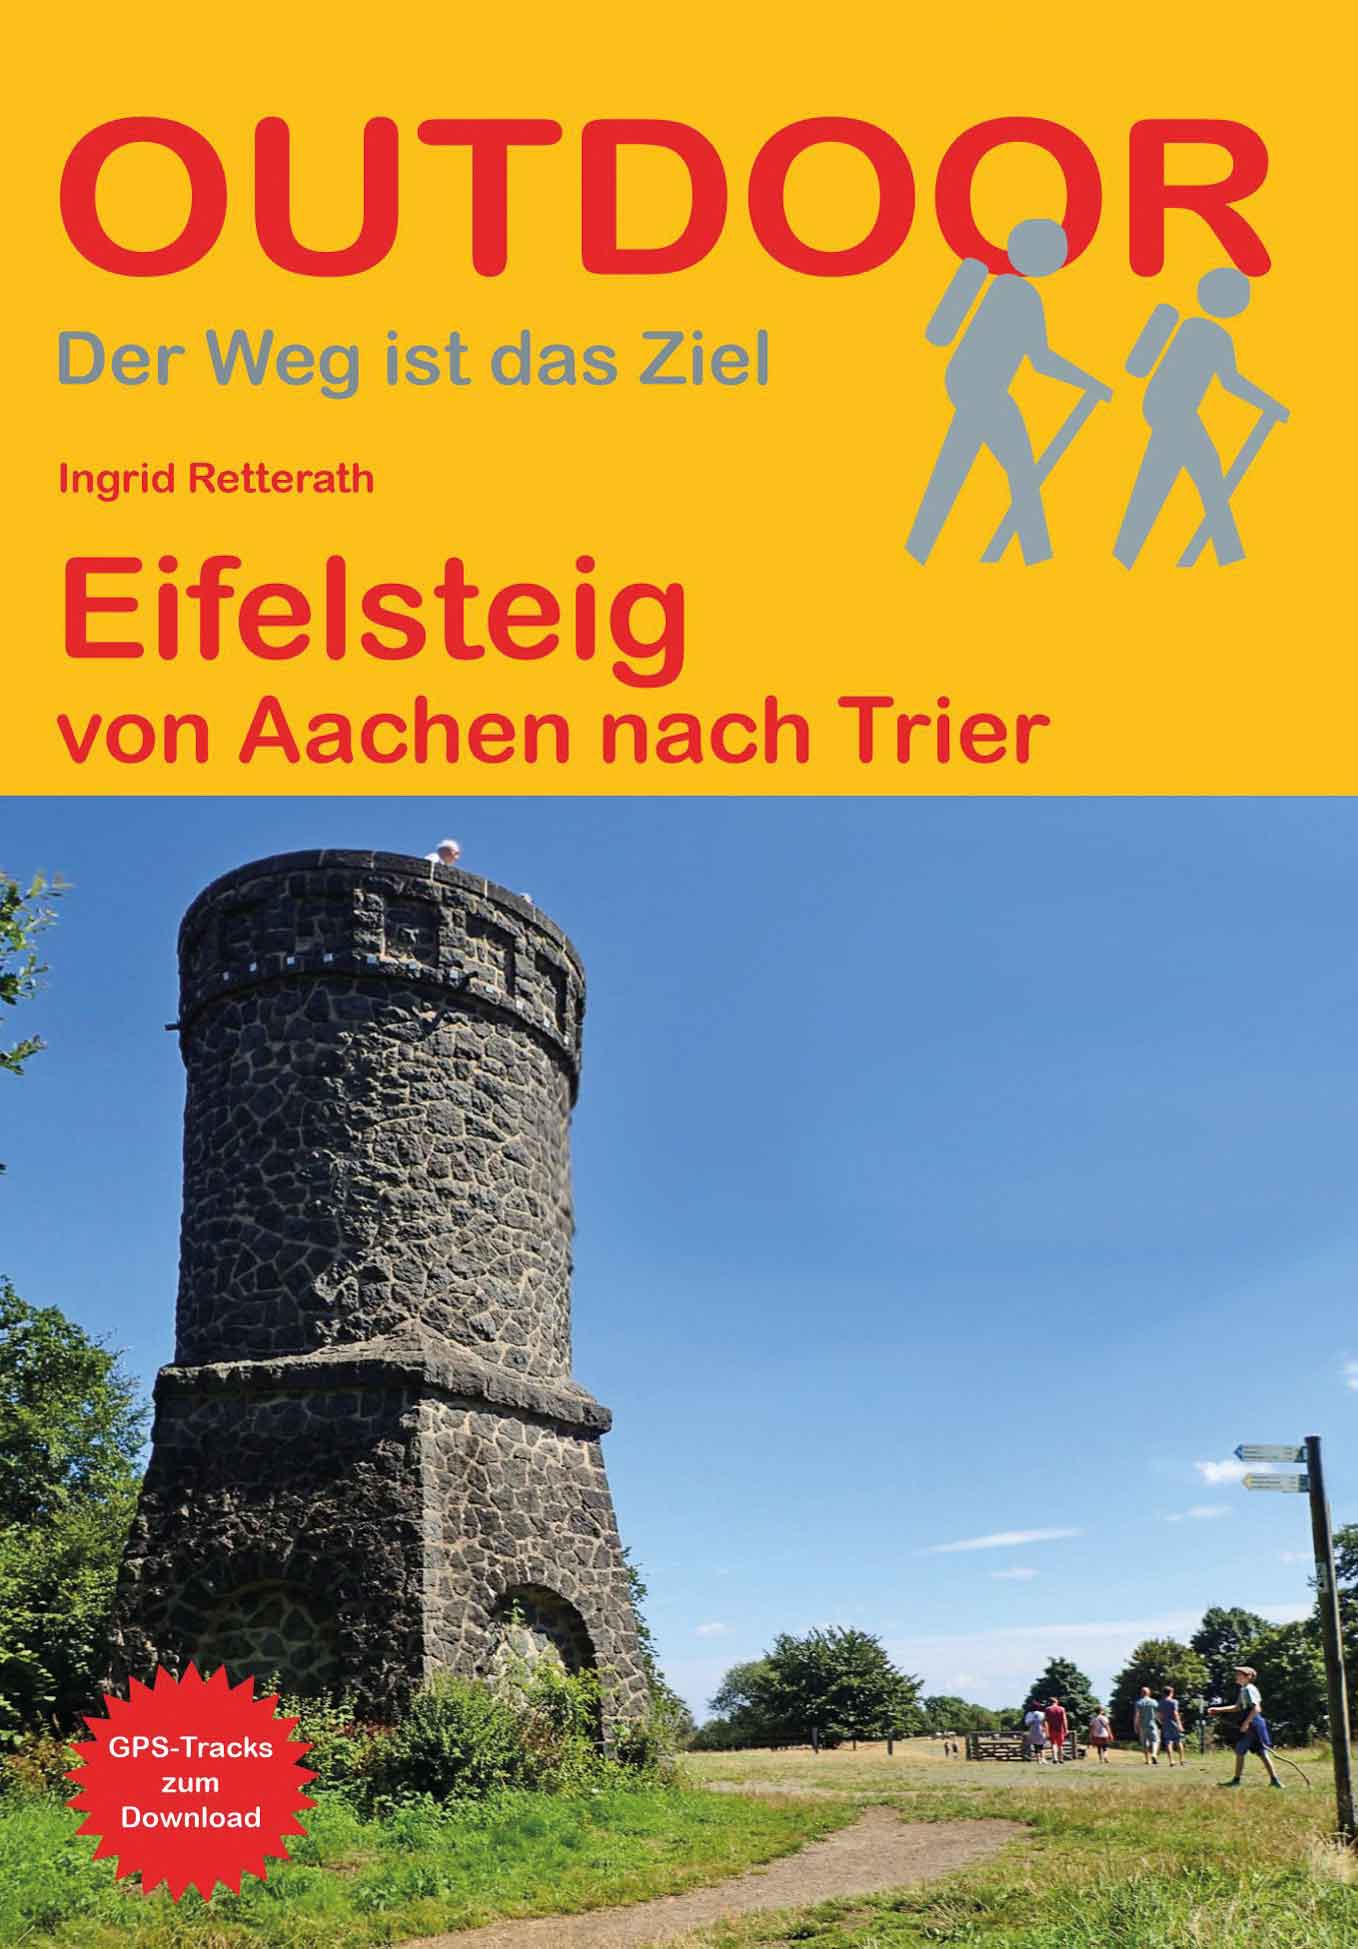 Online bestellen: Wandelgids Eifelsteig (Duitsland Aachen - Trier) | Conrad Stein Verlag